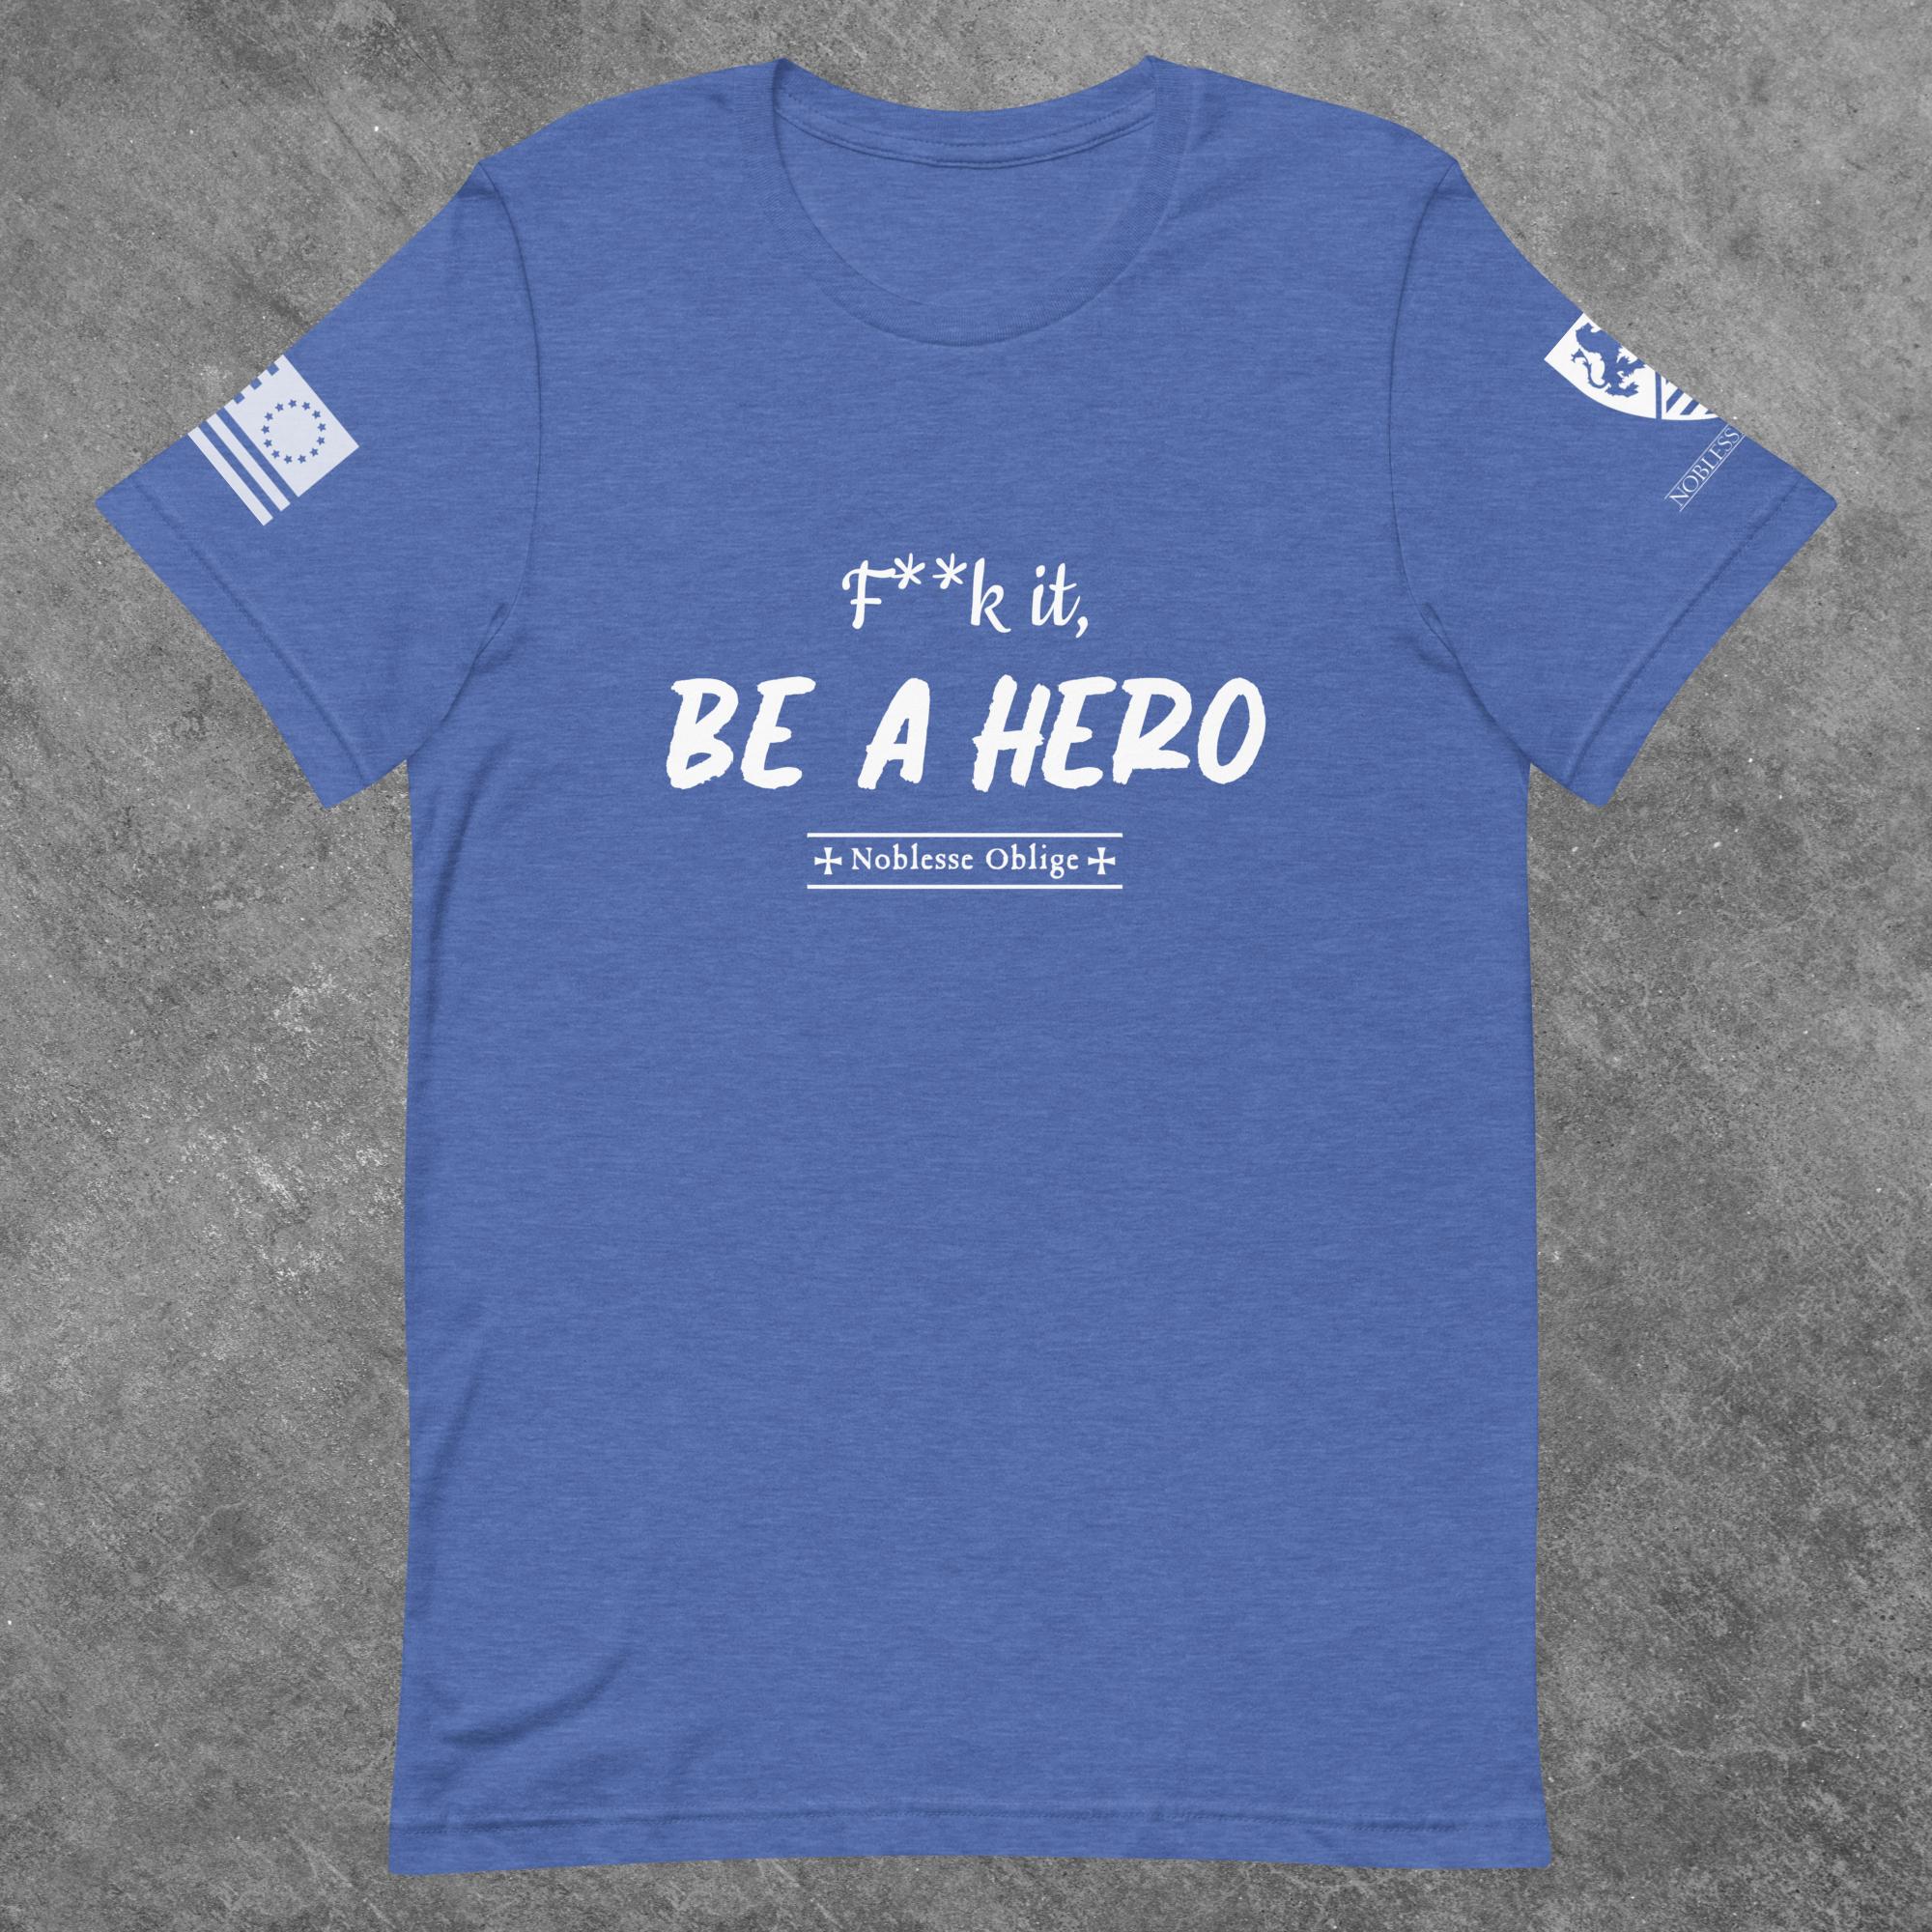 F**k it, Be a Hero - Heather Tshirt - Noblesse Oblige Apparel